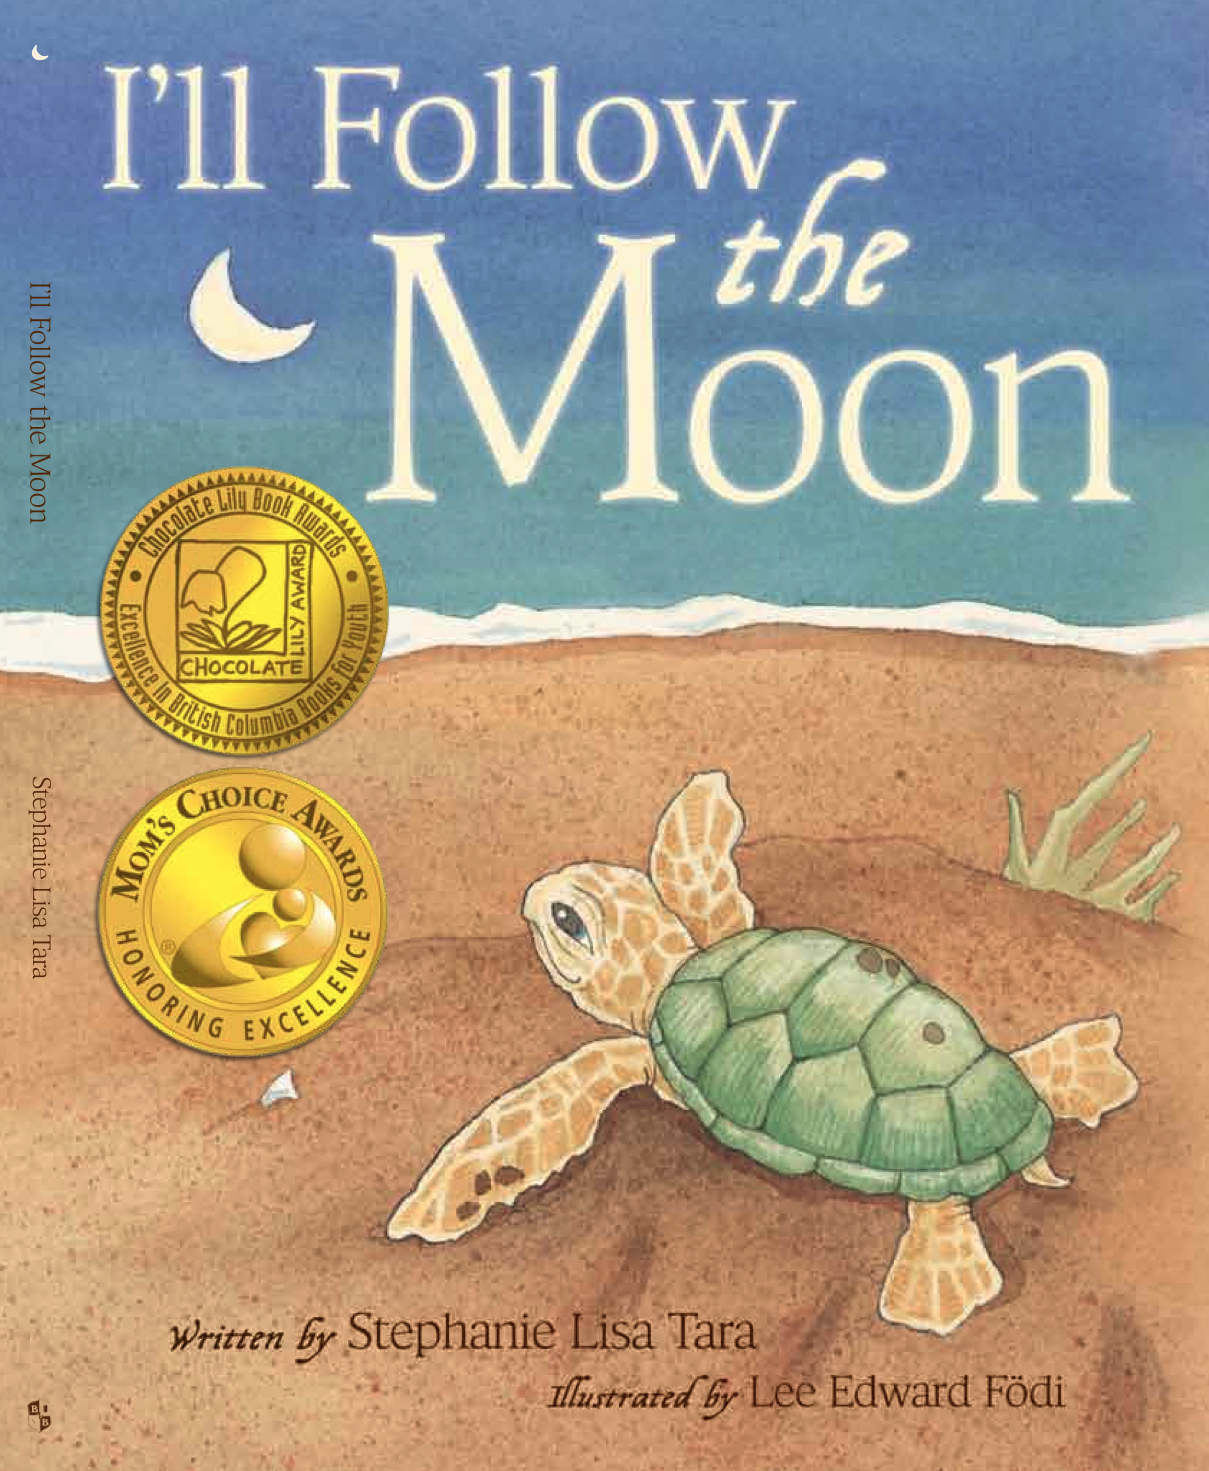 Путь черепахи книга. Книжка про черепаху черри. Moon book for Kids.